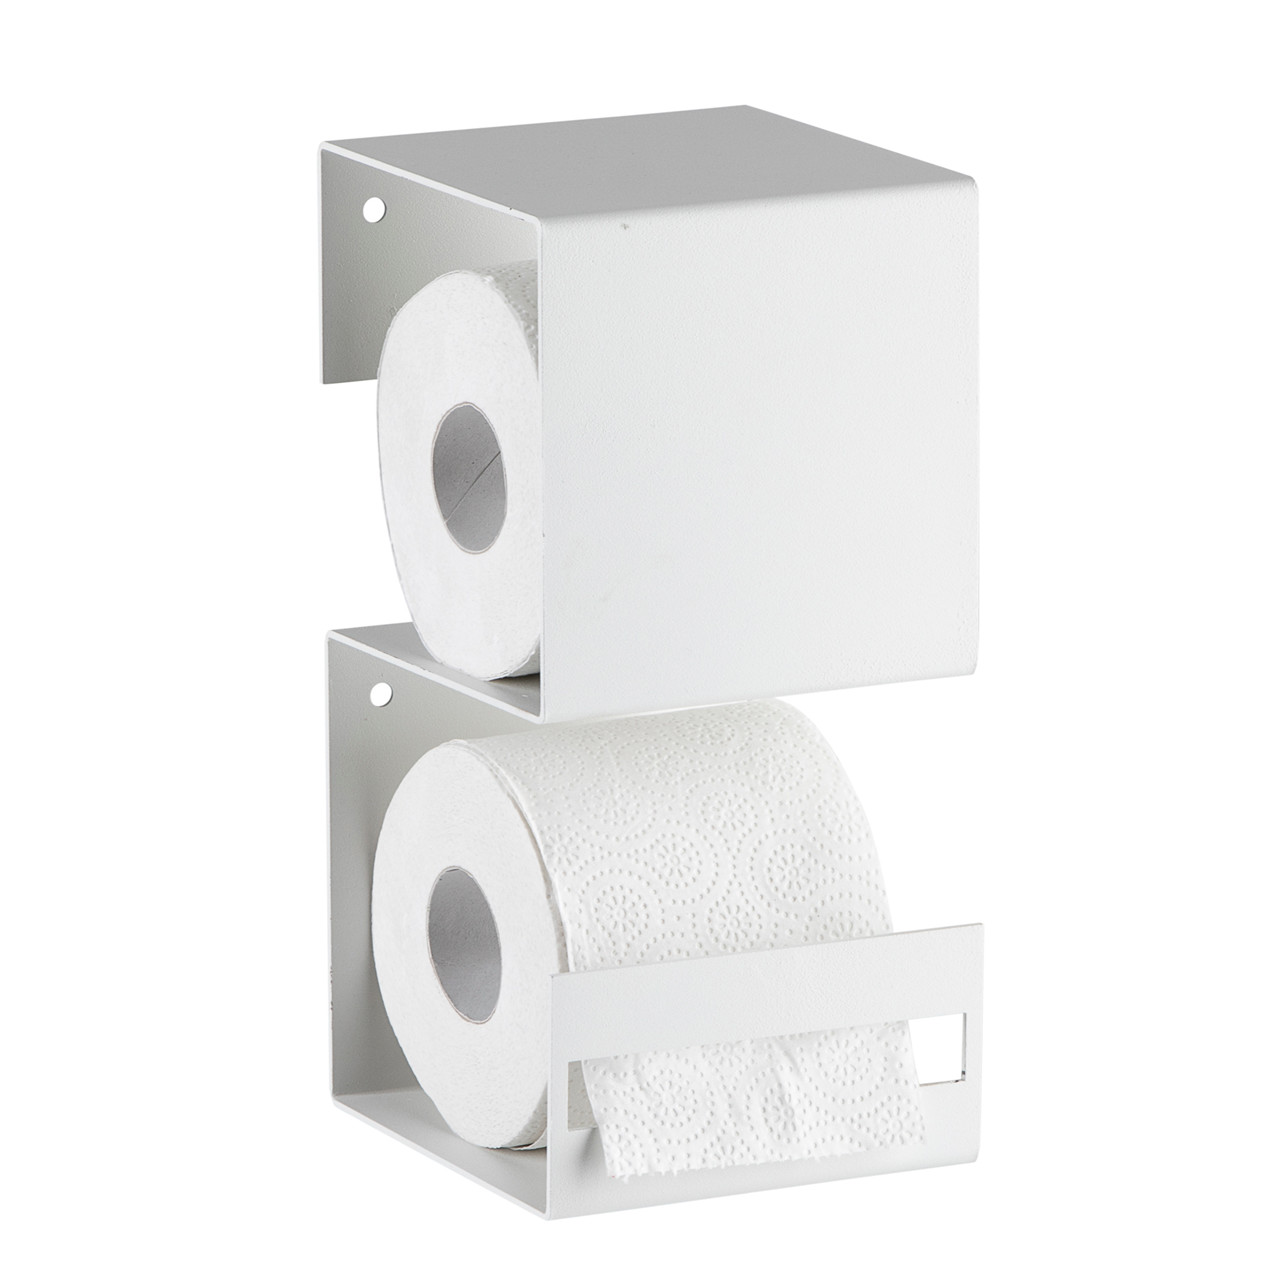 SHAPE IT toiletrulleholder hvid // Forventes på lager til vinter